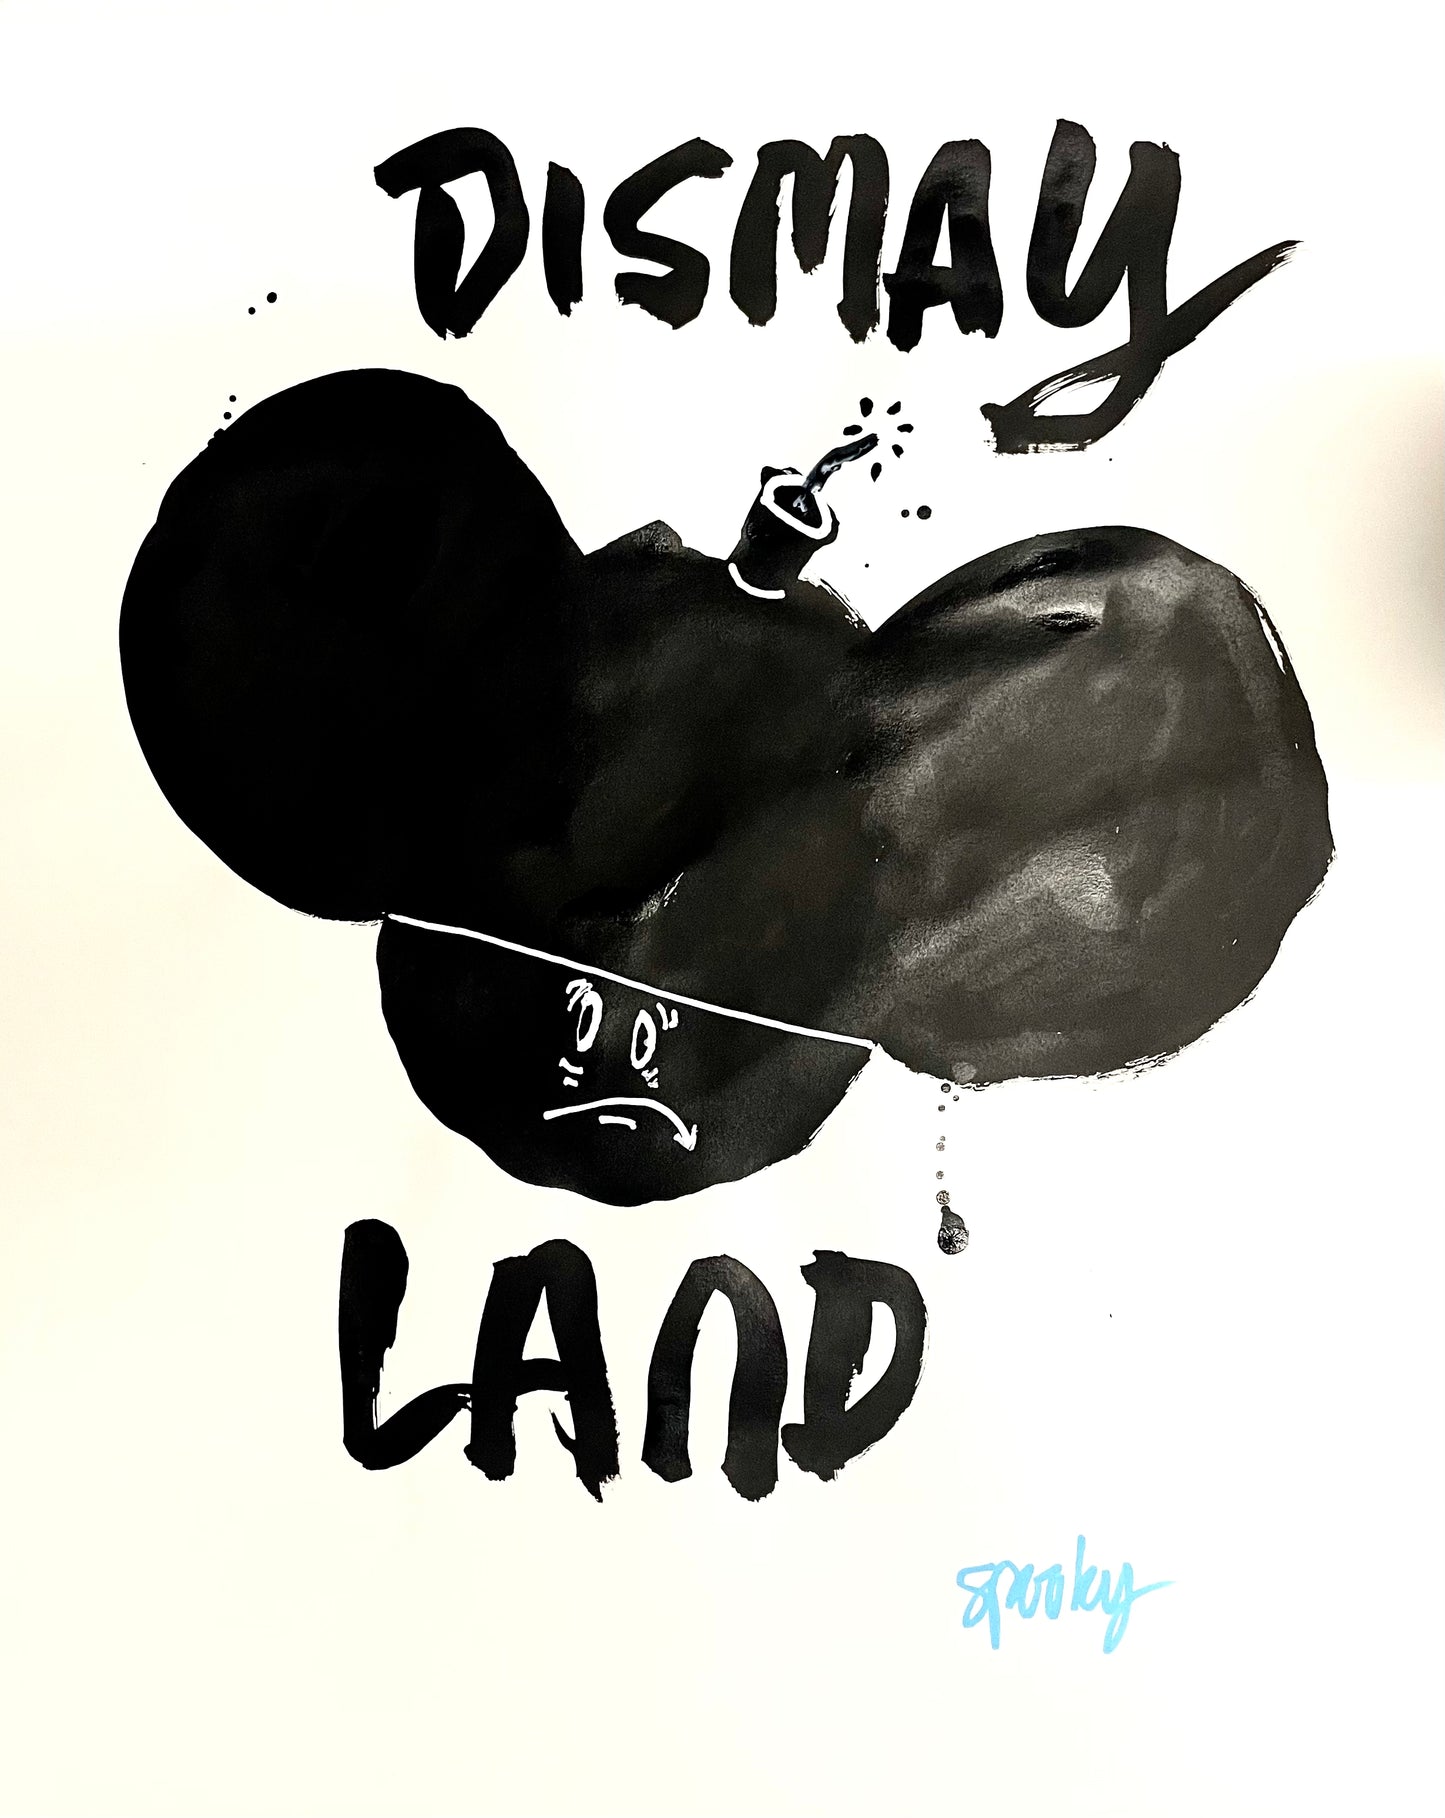 Dismay Land